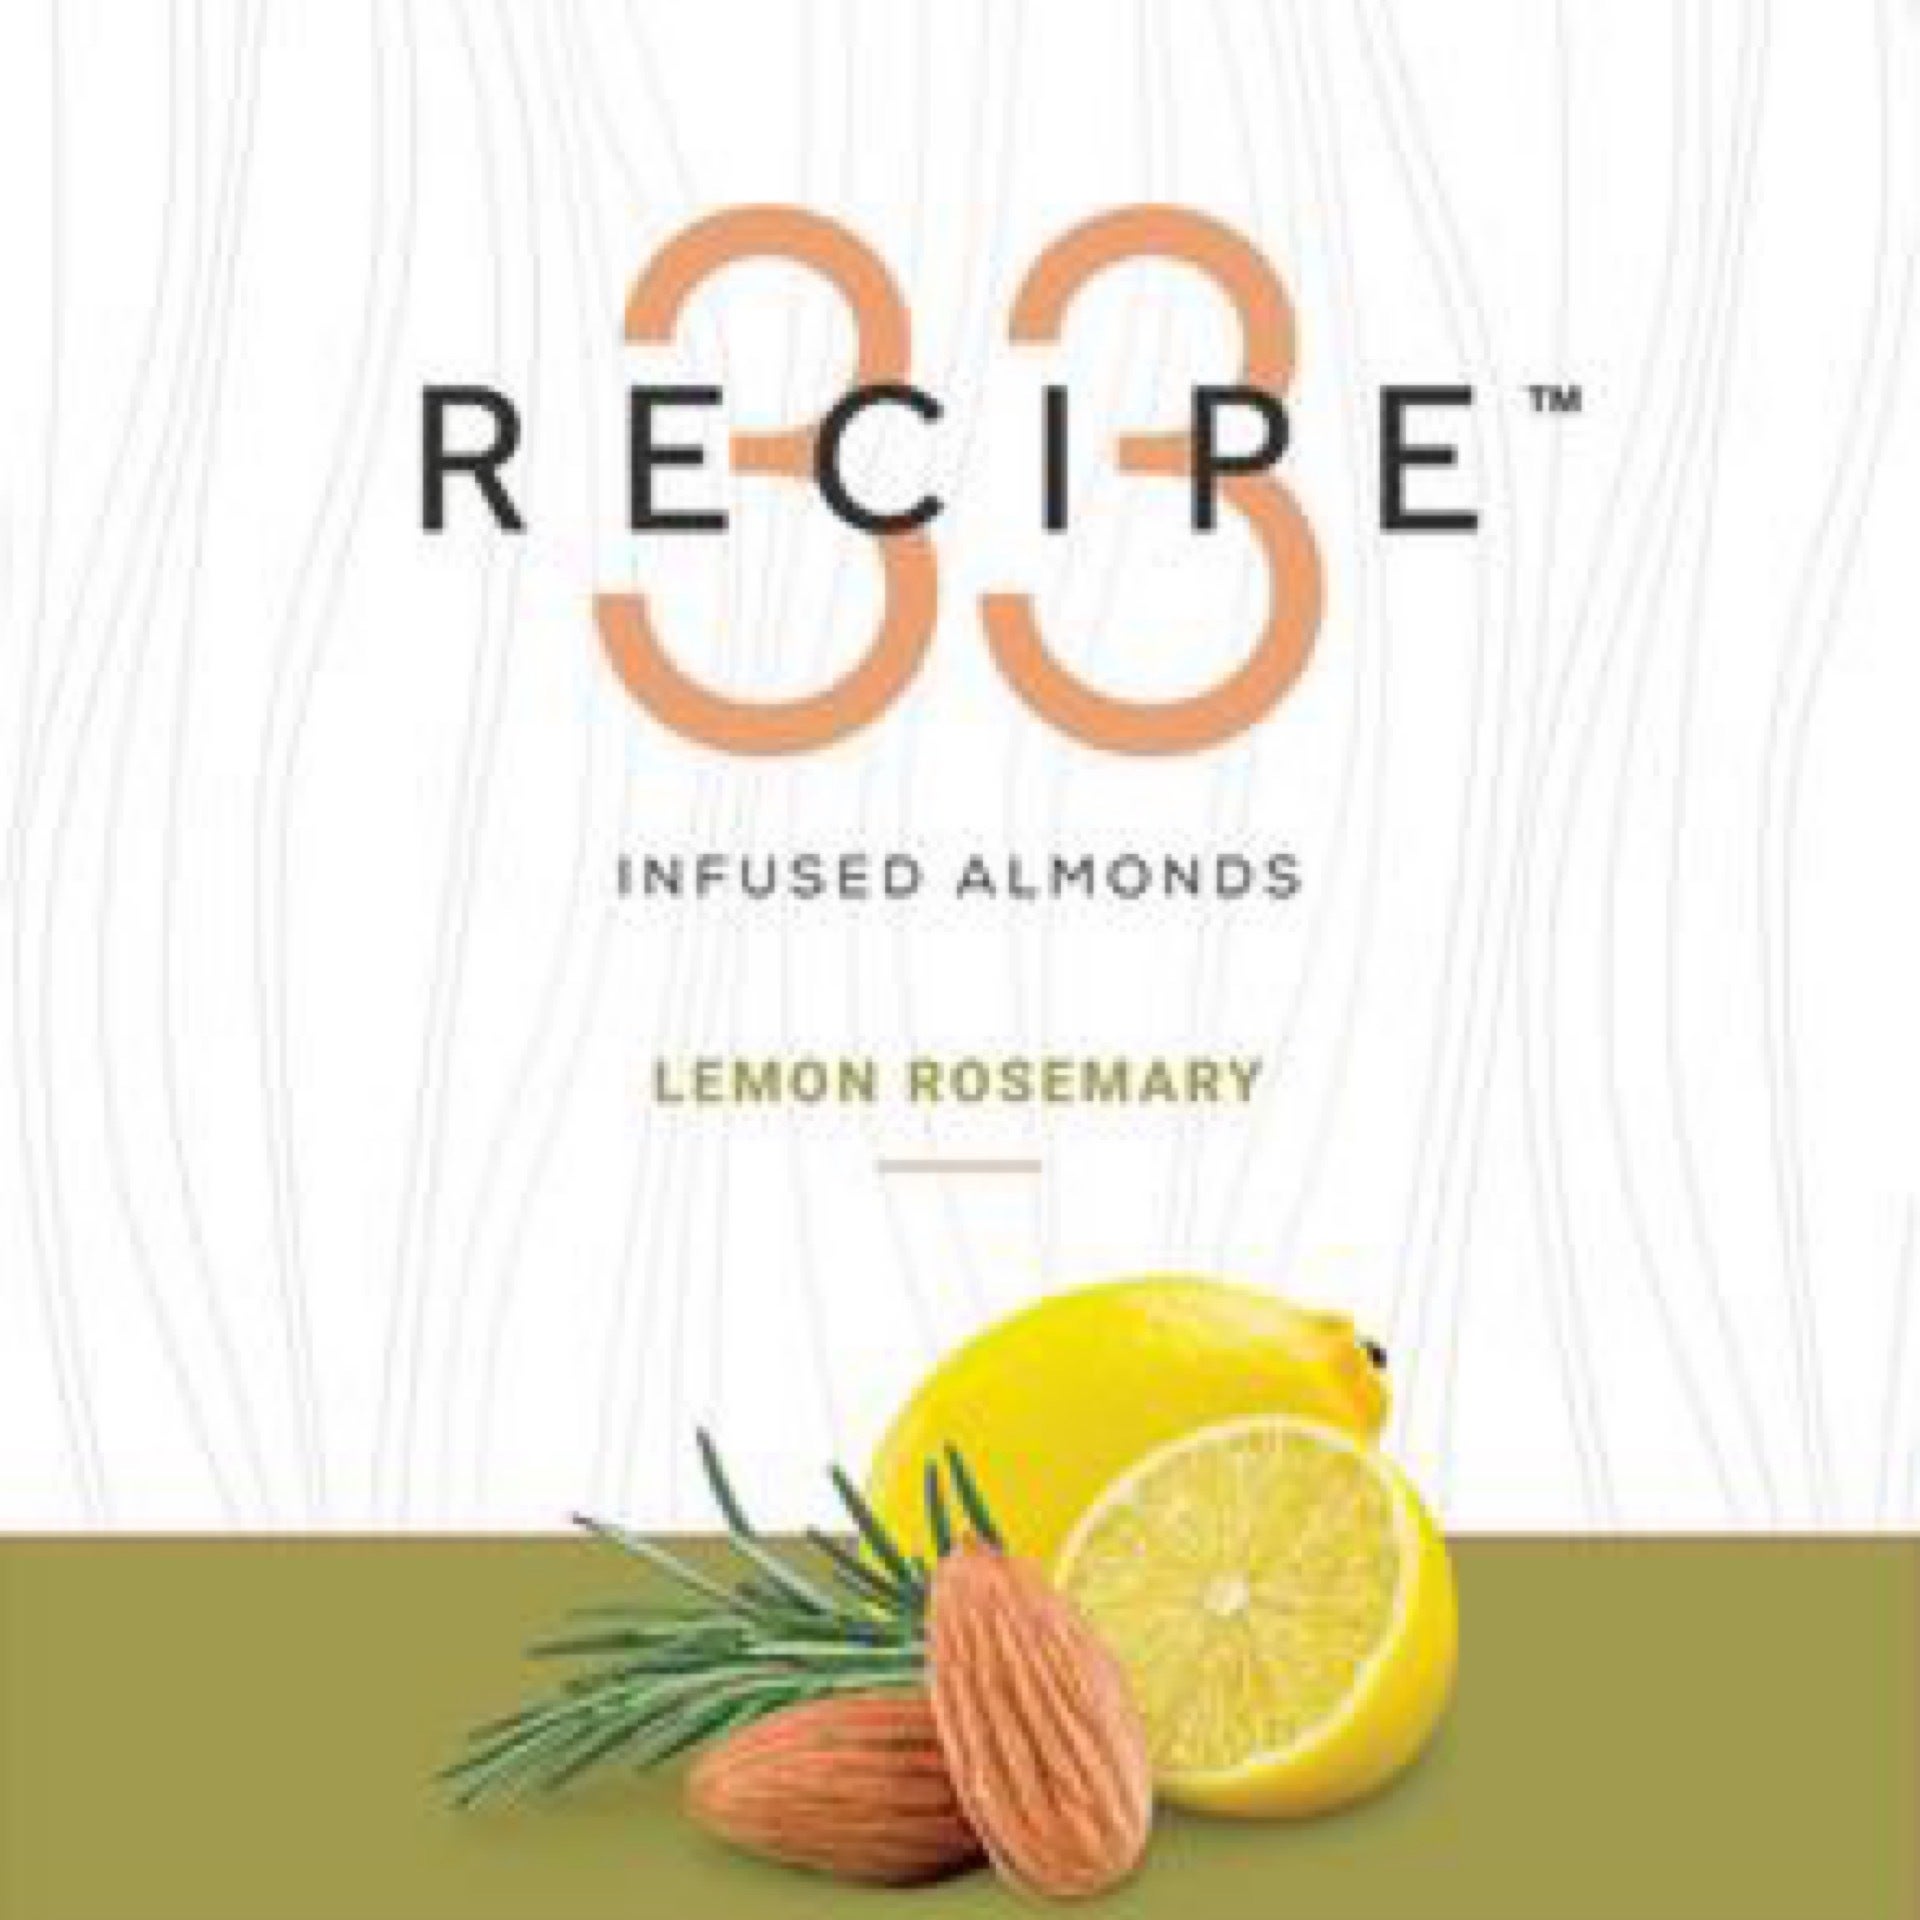 Recipe 33, Lemon Rosemary infused almonds